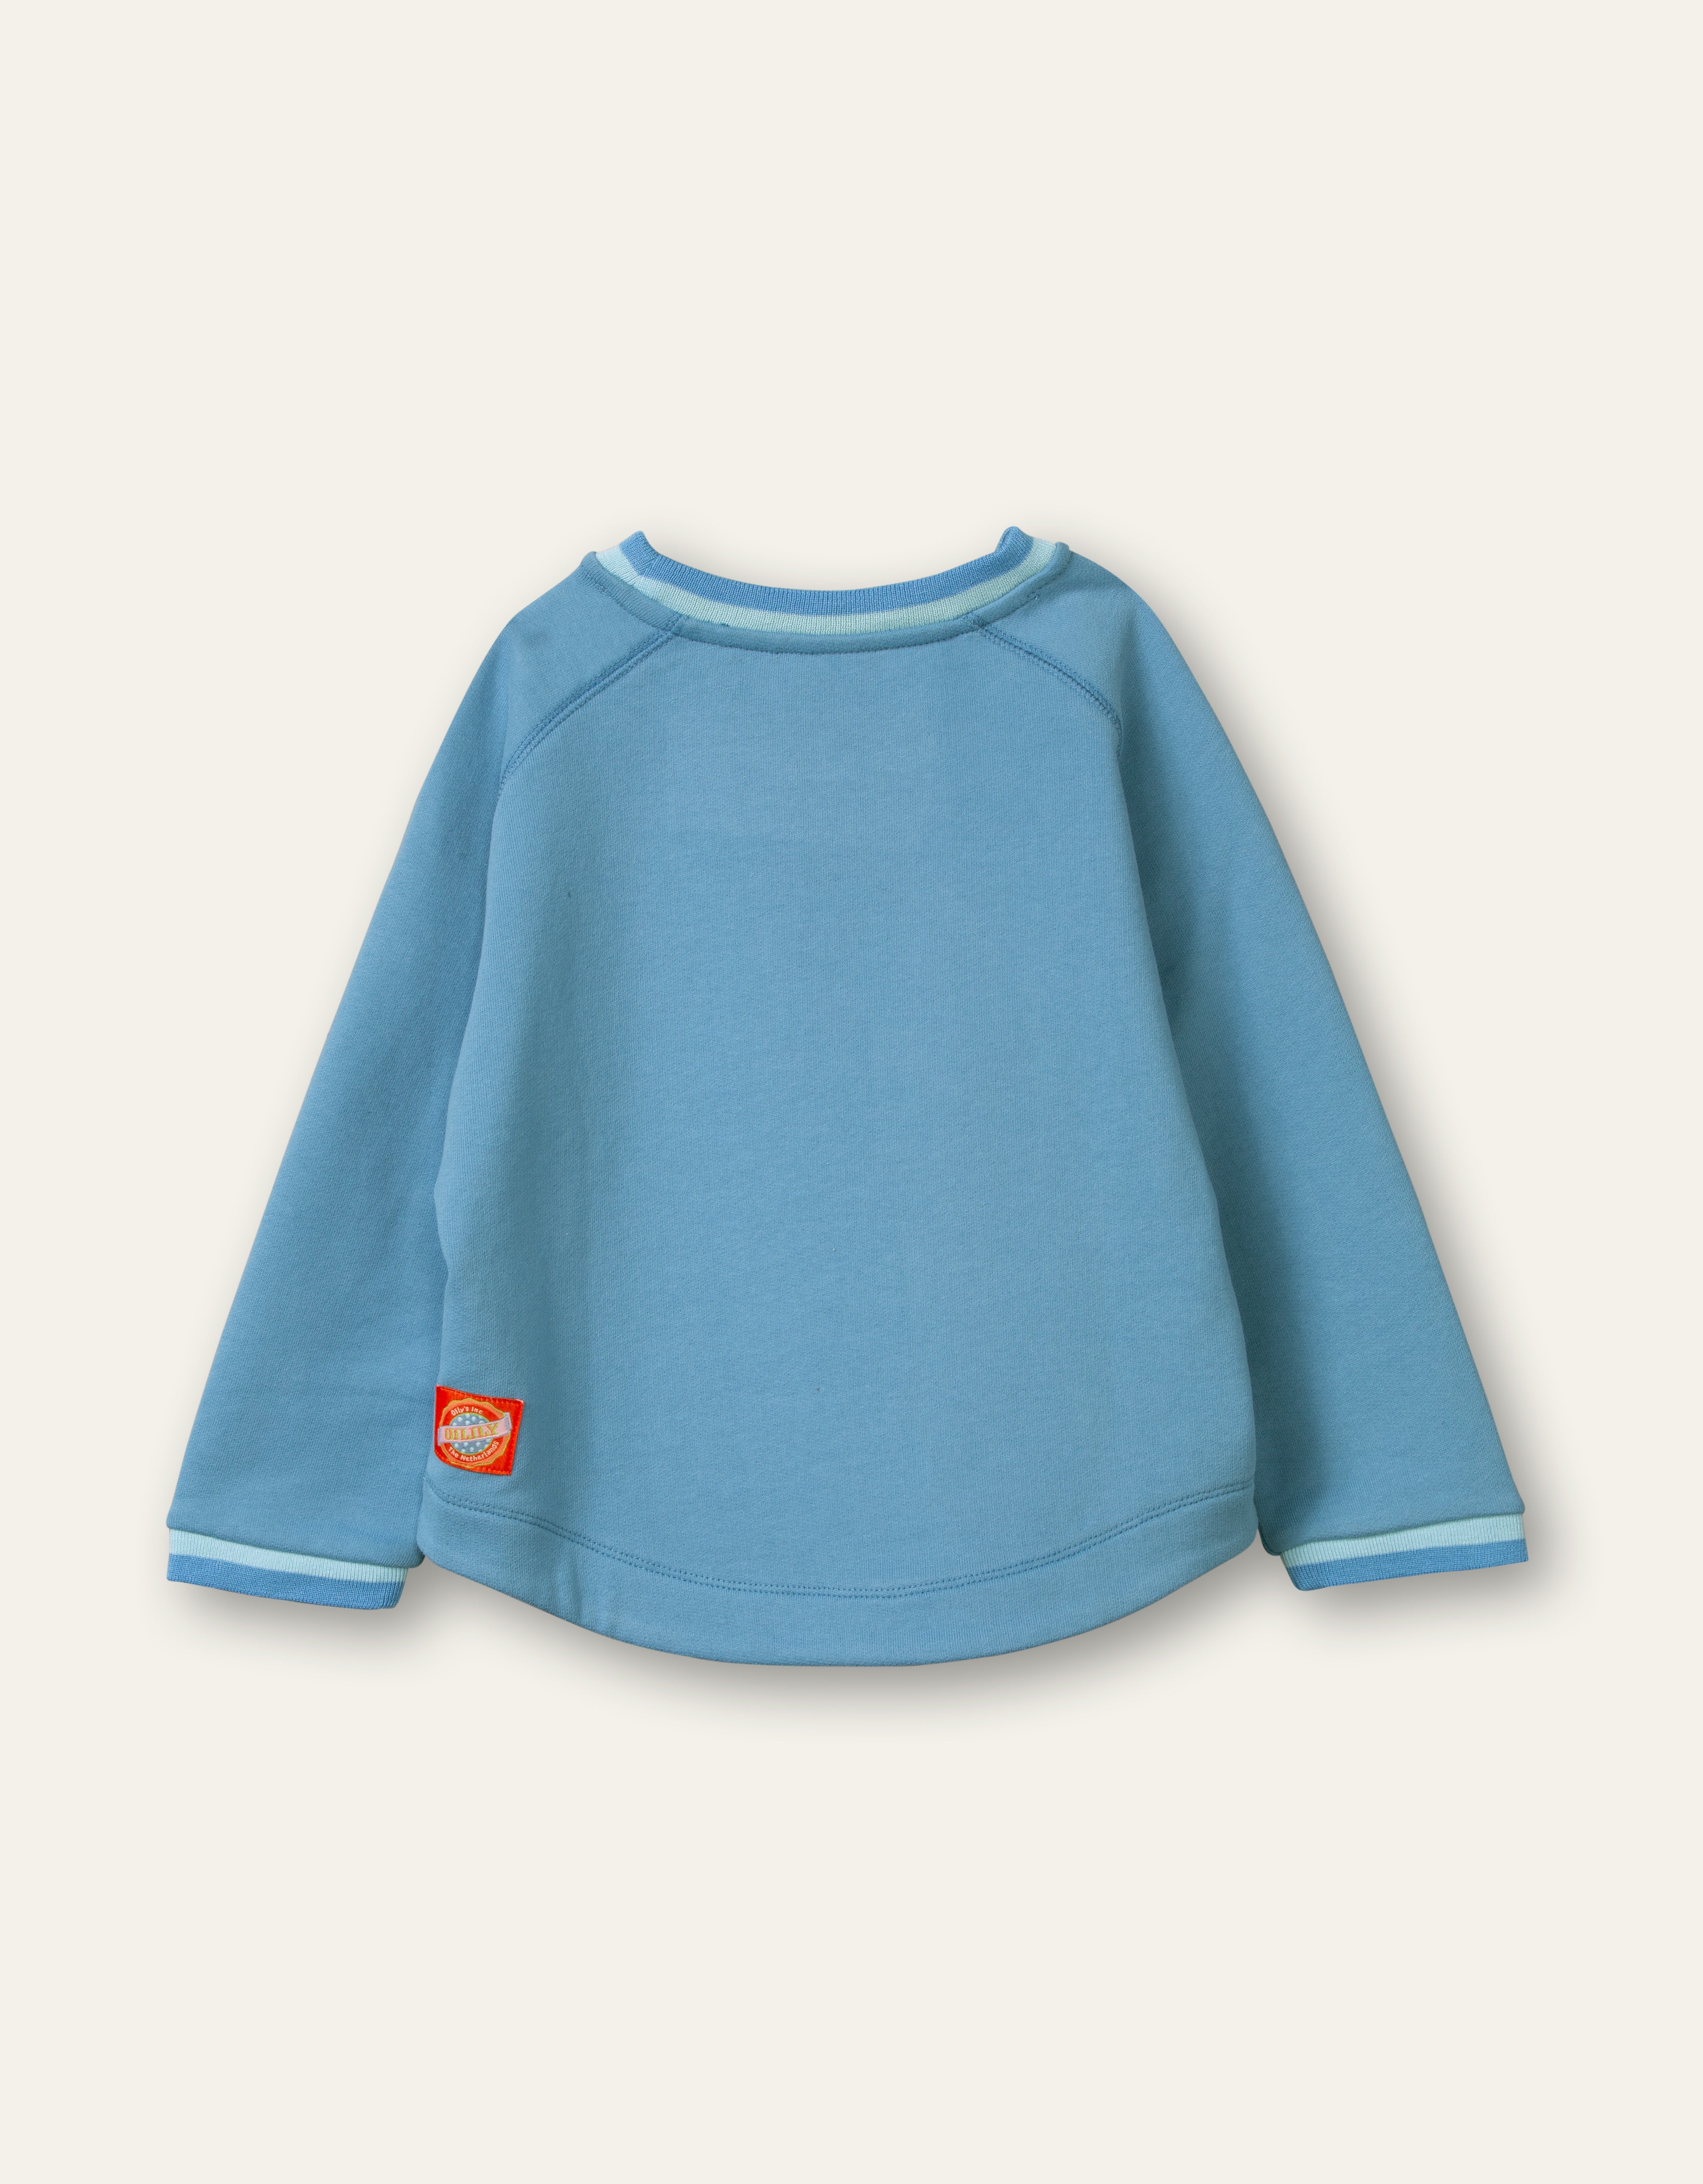 Oilily Home sweater 52 solid sweat riviera blue artwork Tigerhead